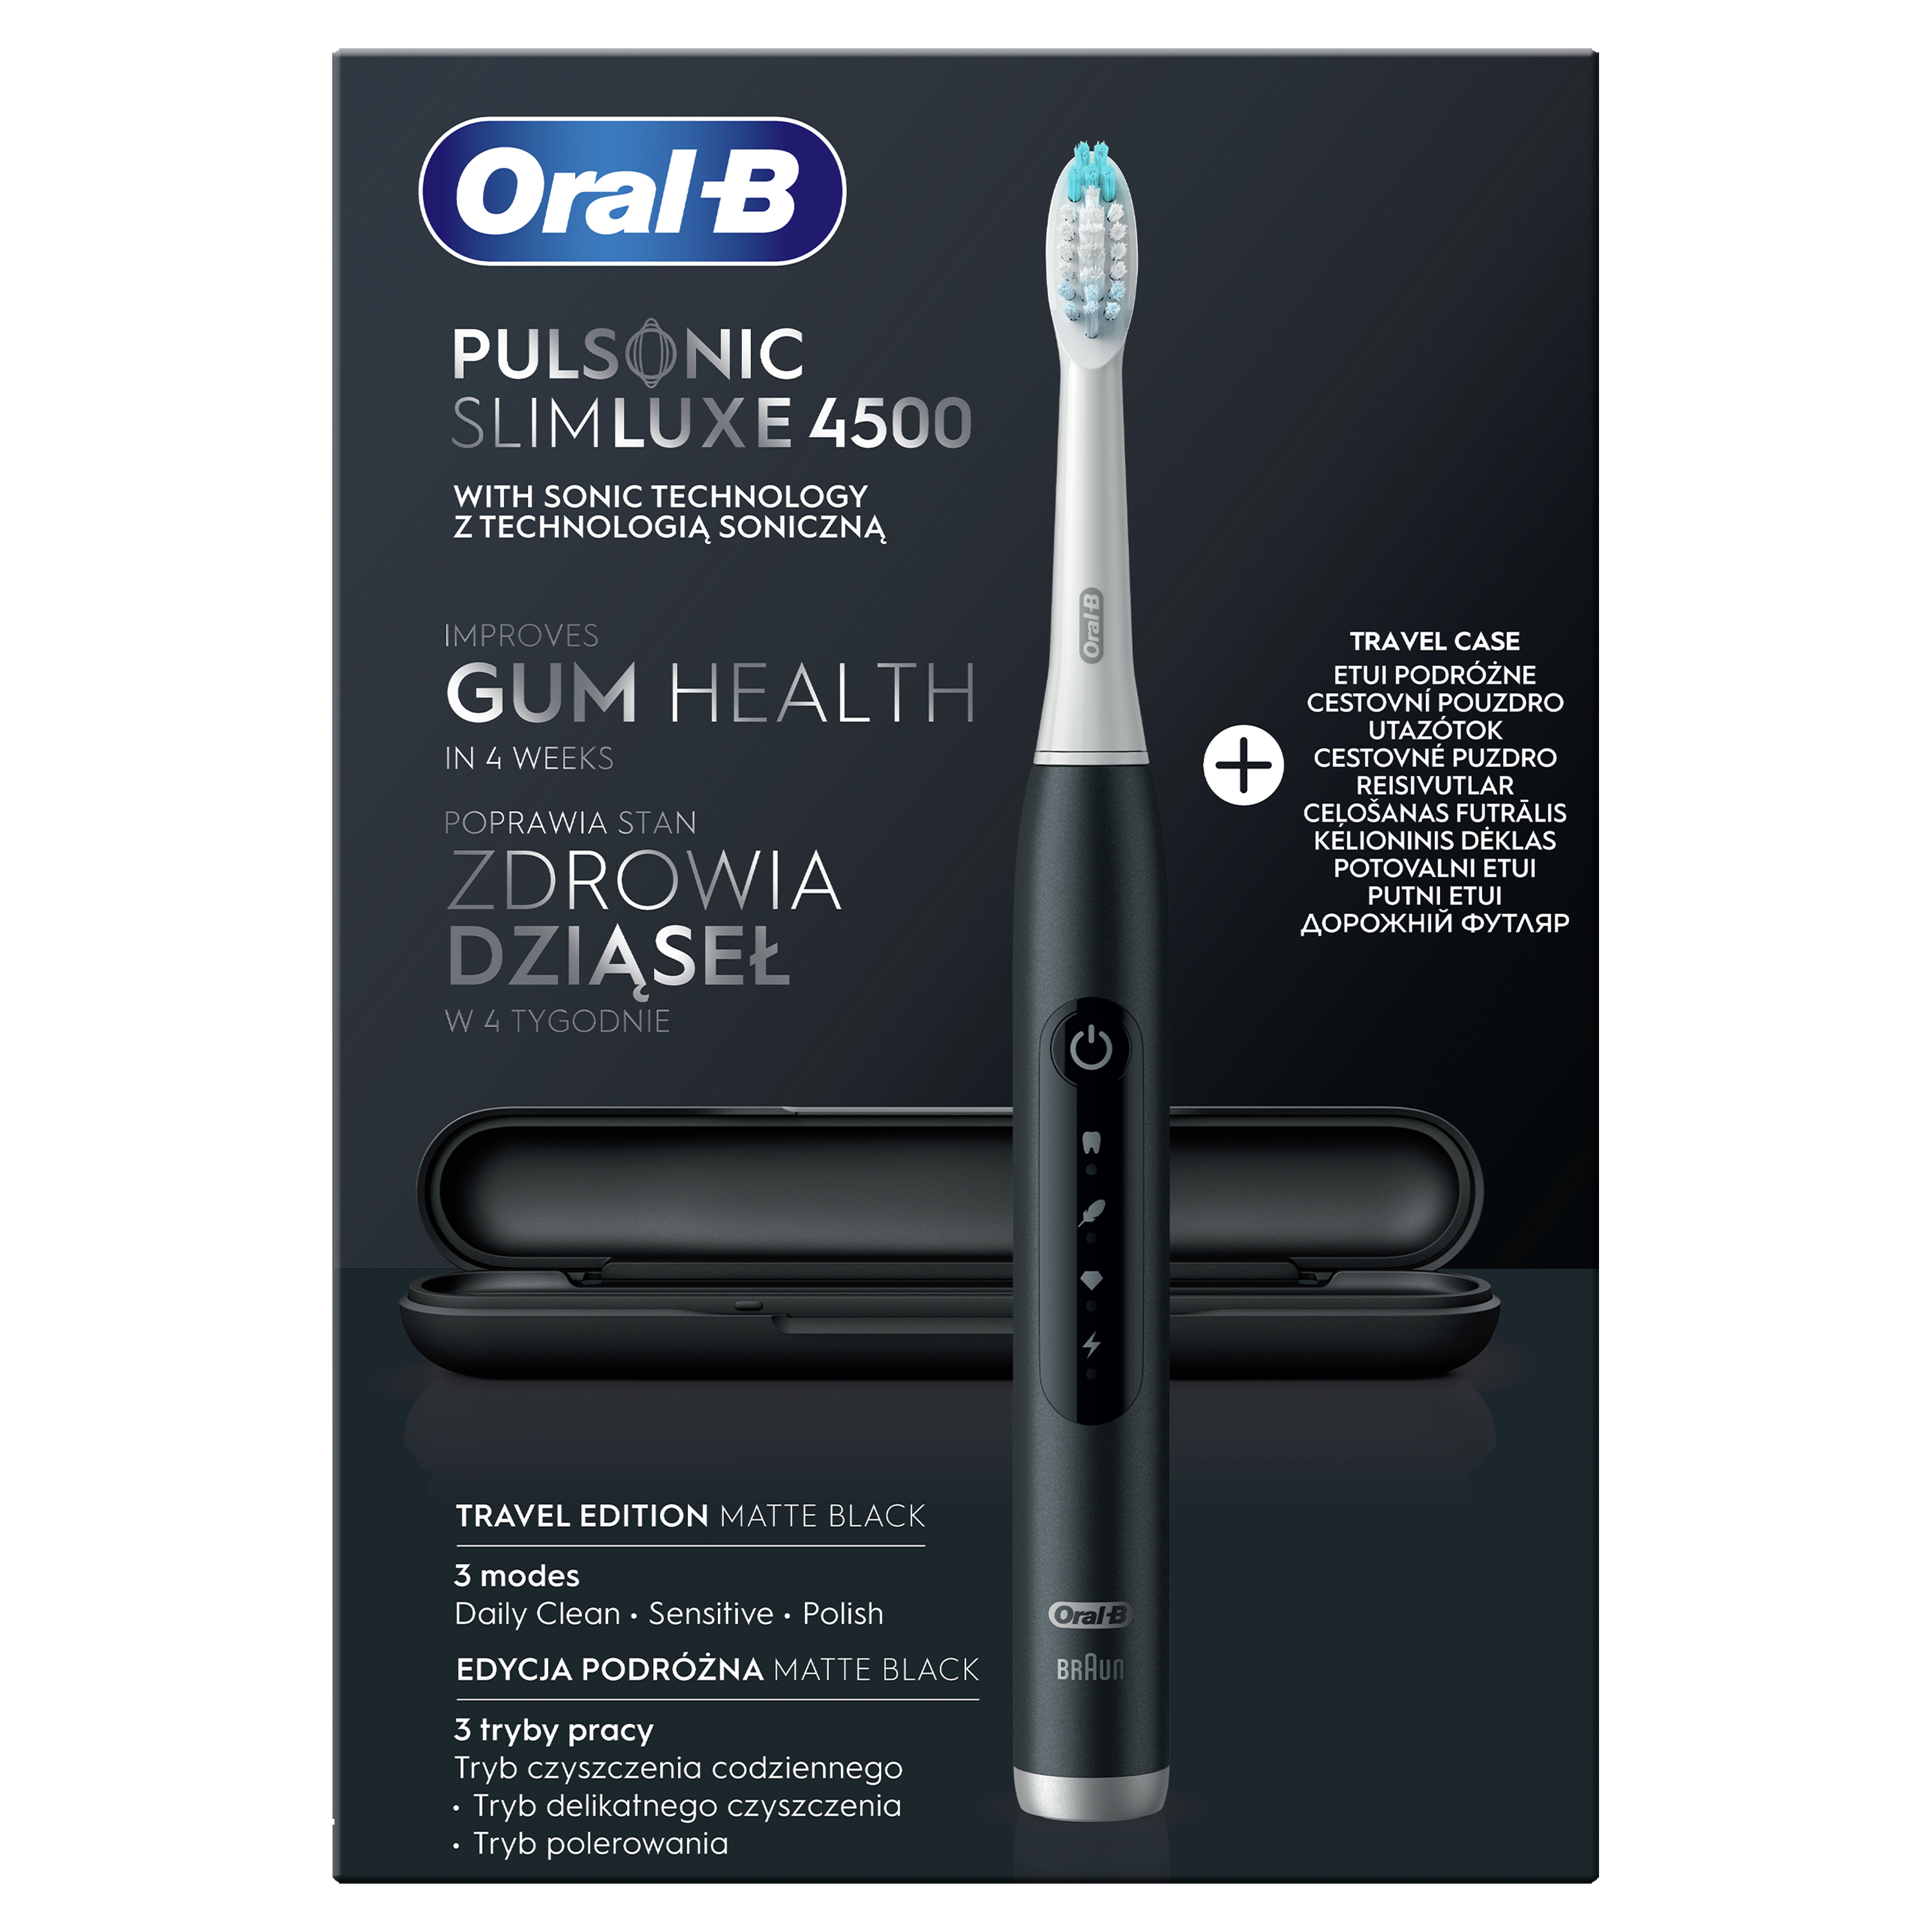 Електрична звукова зубна щітка Oral-B Pulsonic Slim Luxe 4500 + футляр, чорна - фото 2